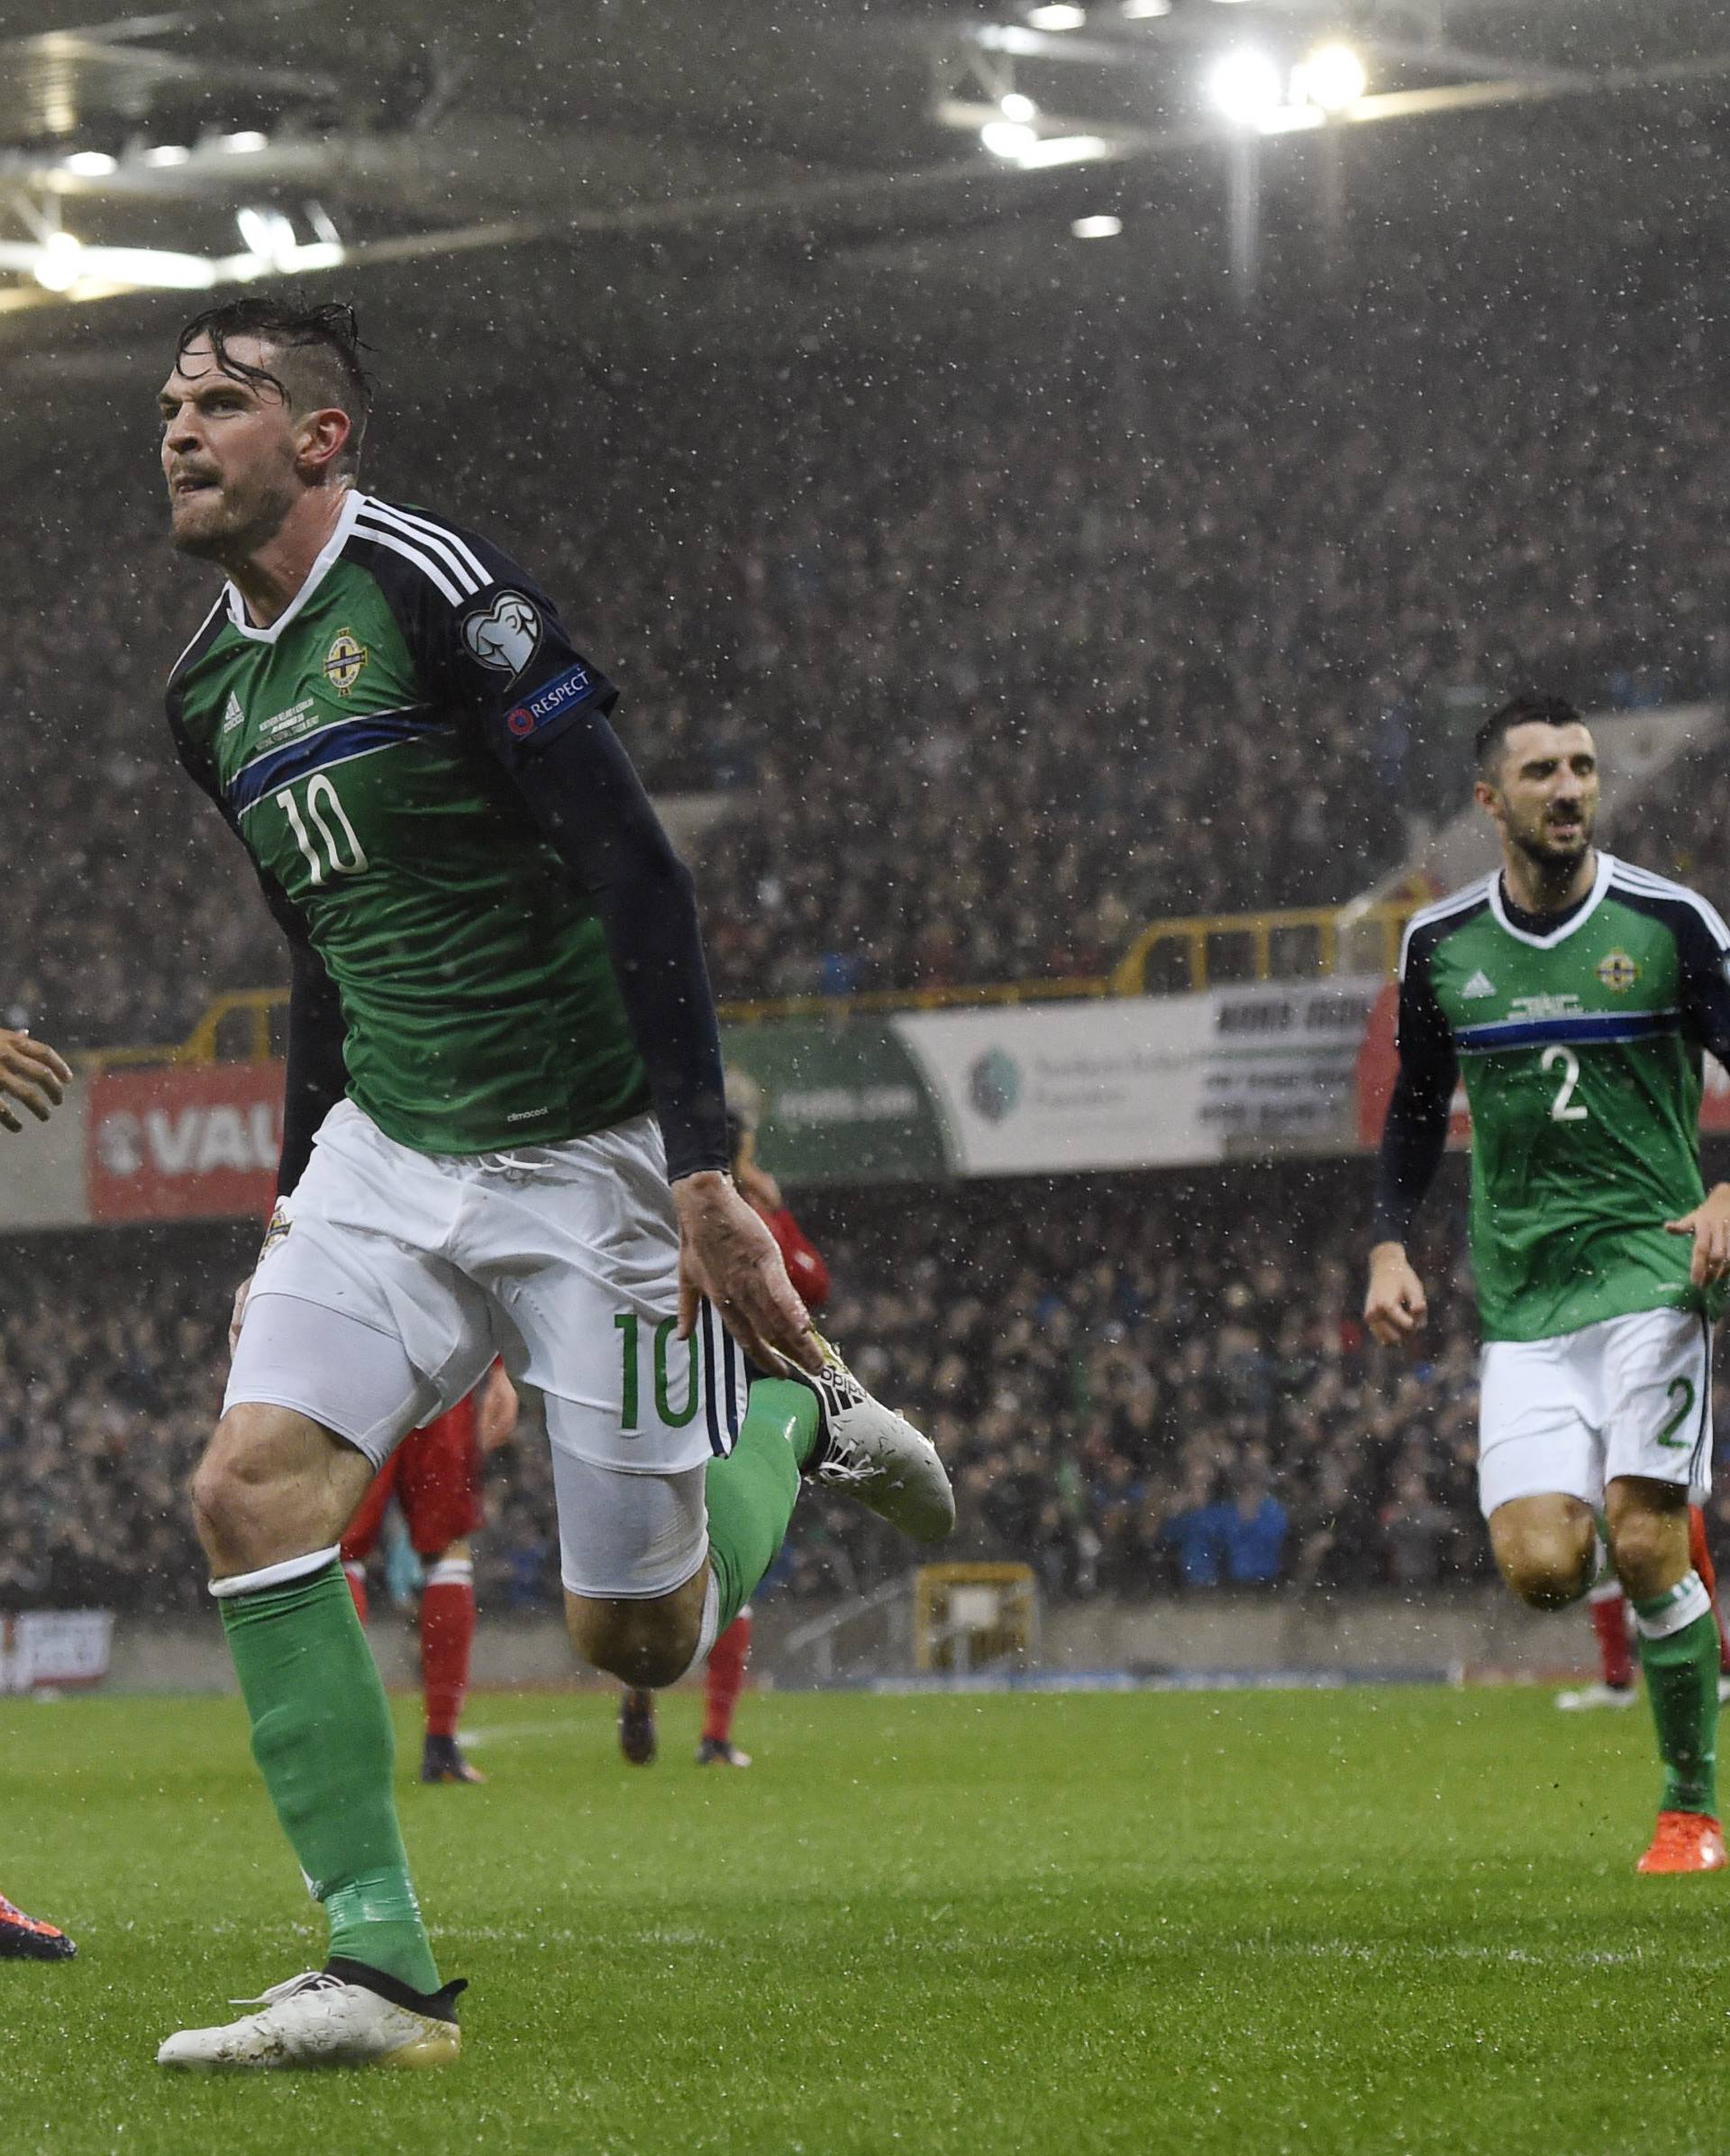 Northern Ireland's Kyle Lafferty celebrates scoring their first goal